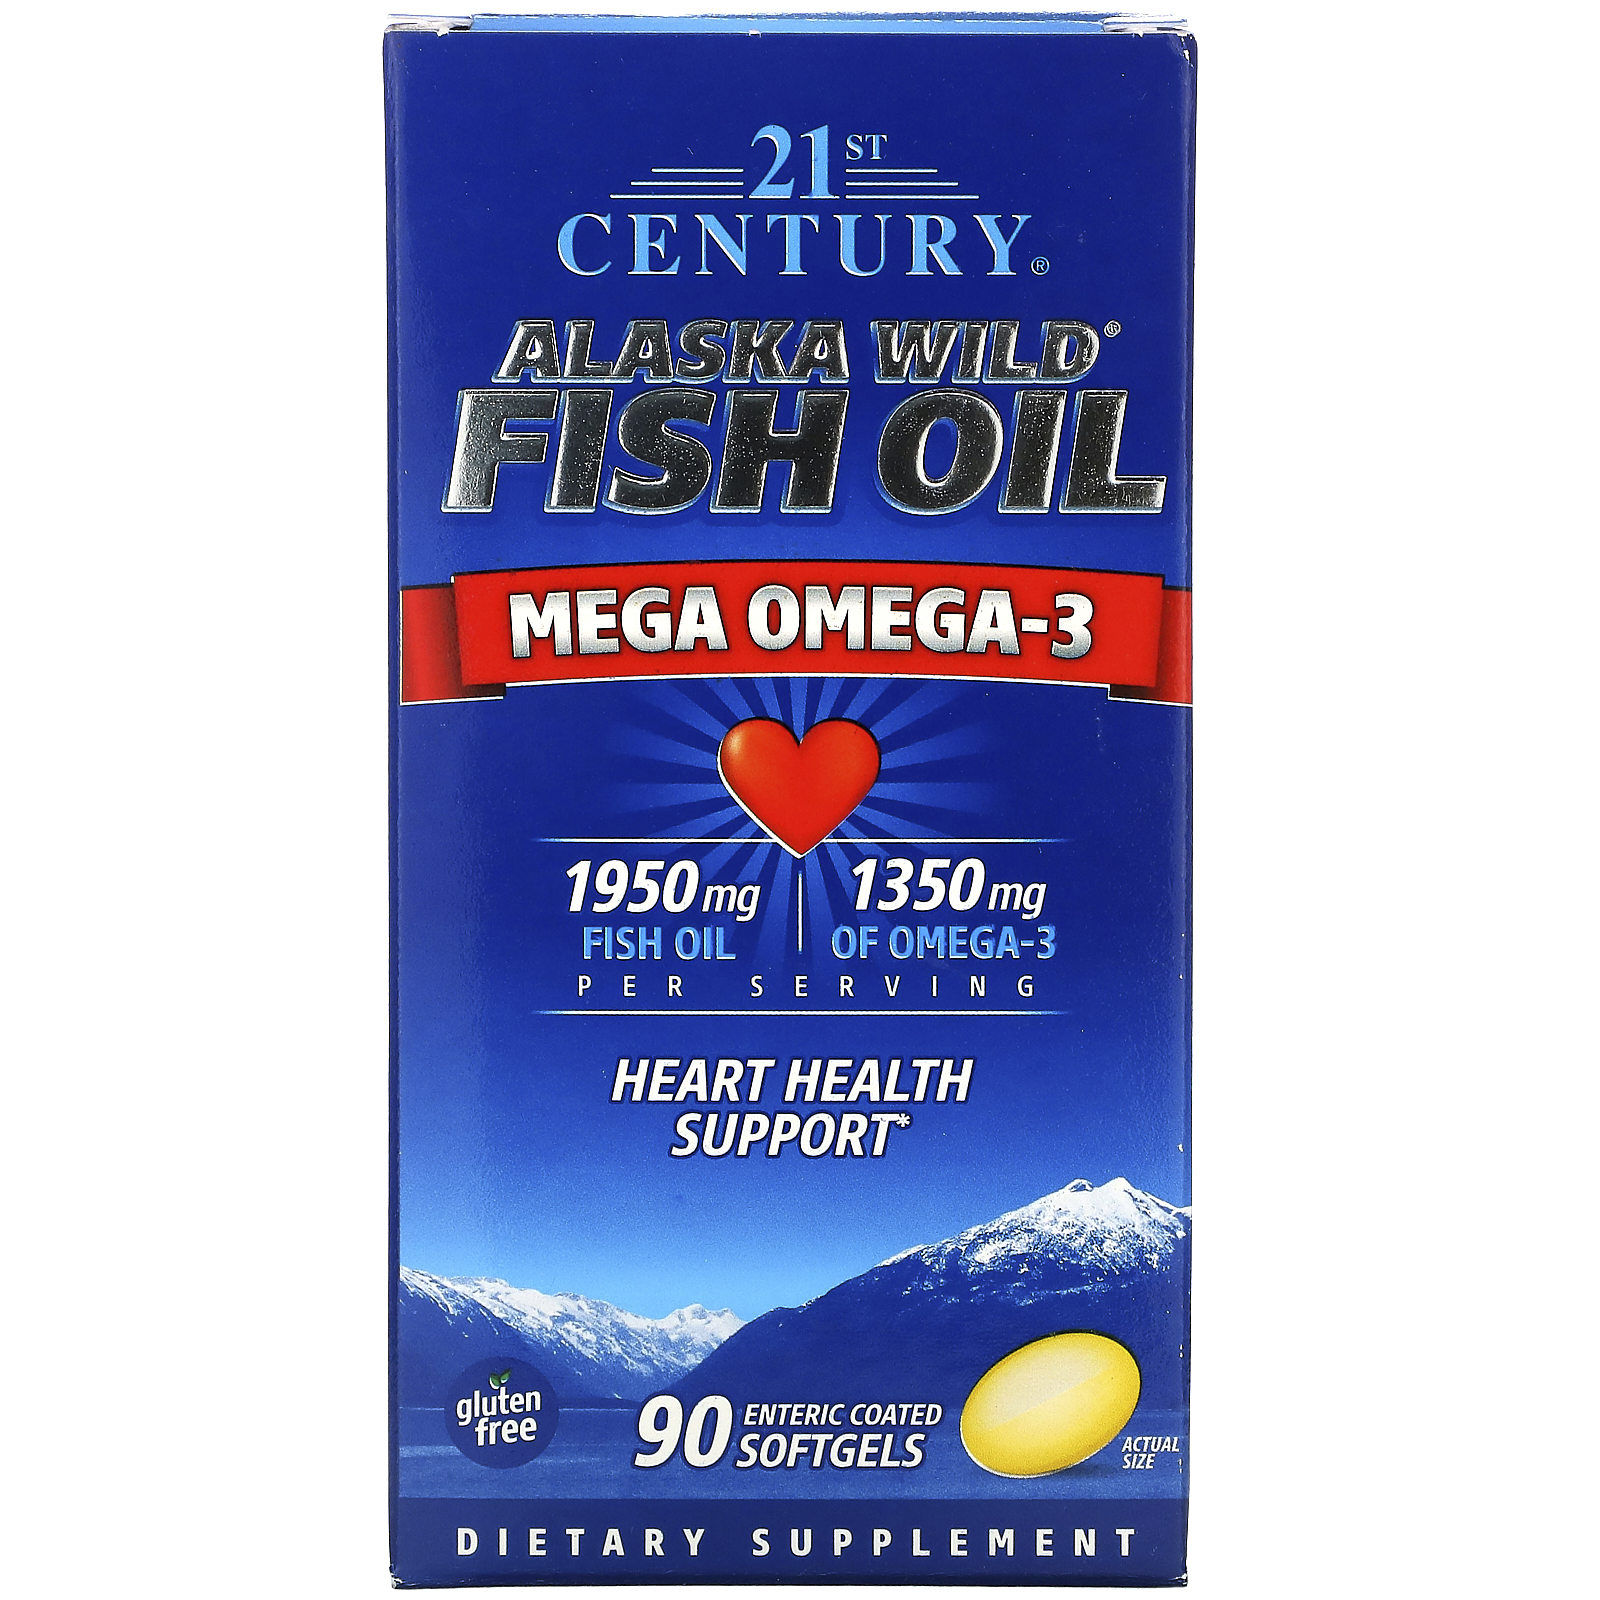 21st century omega 3 fish oil